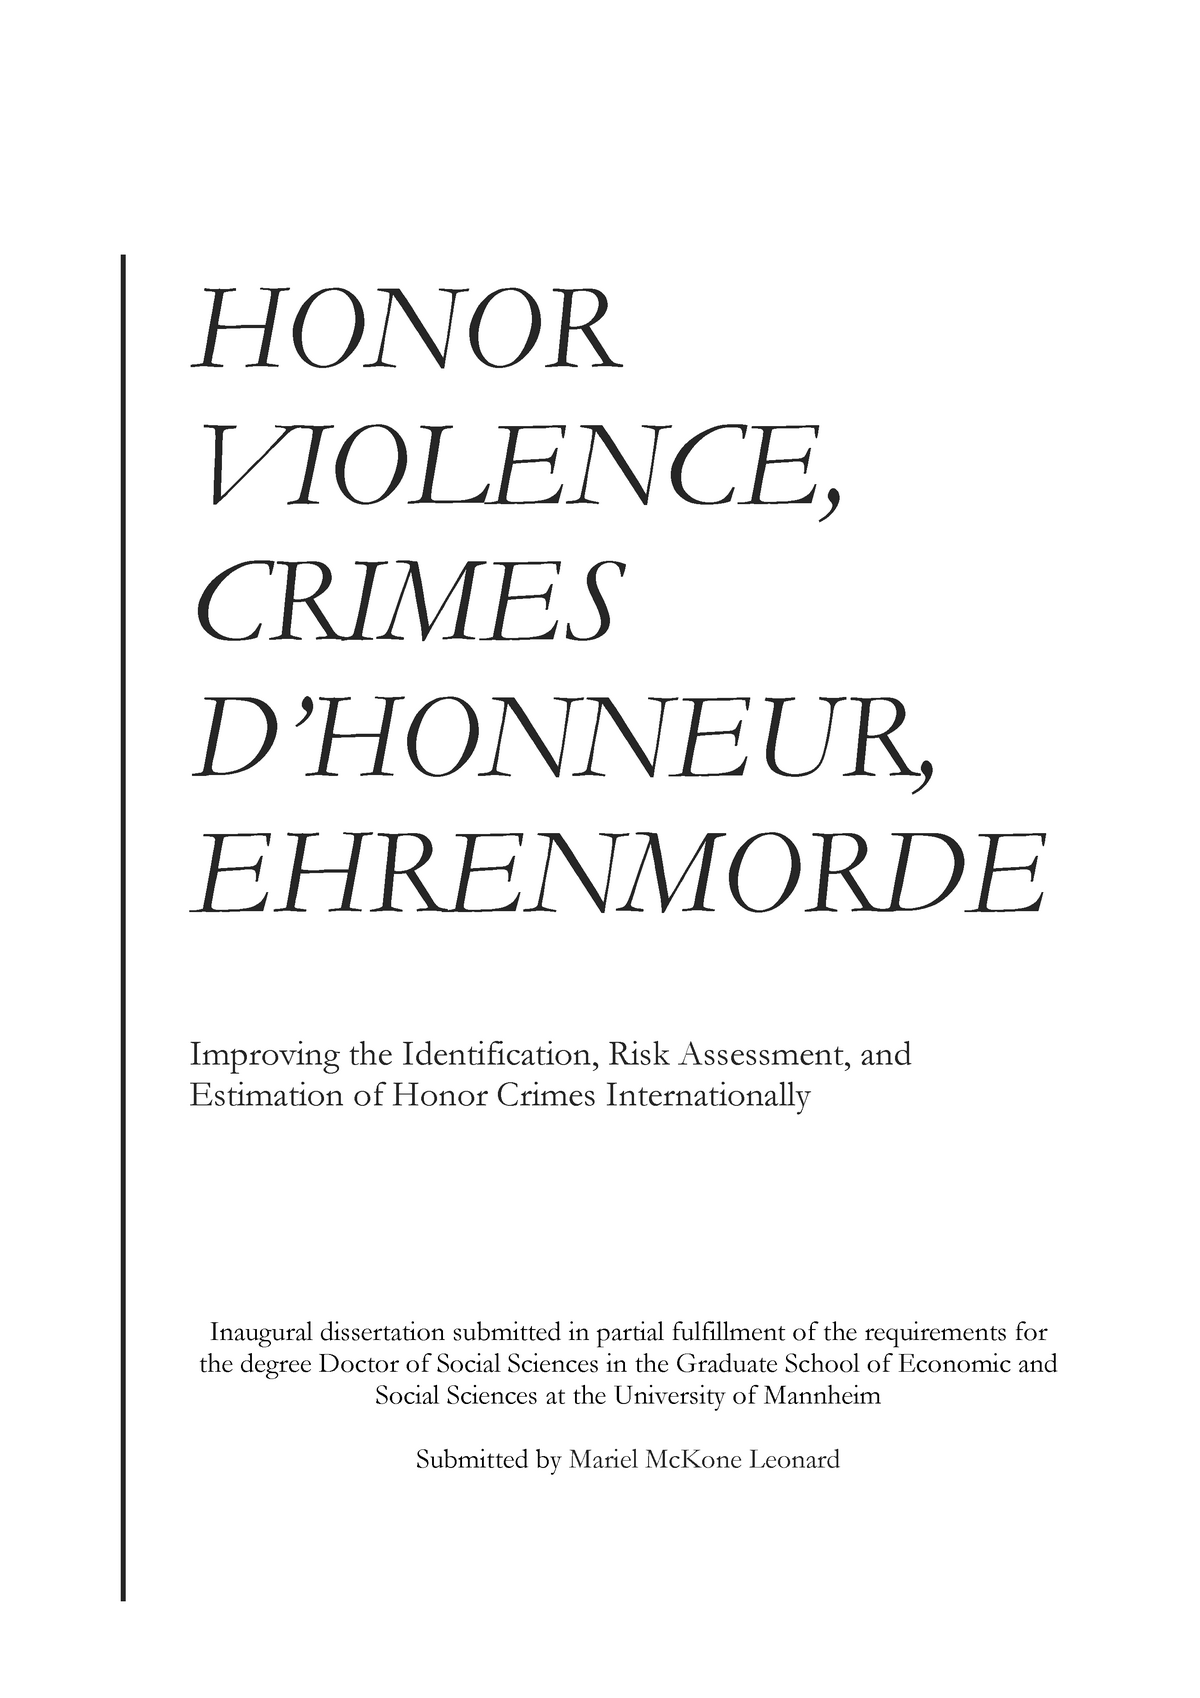 dissertation violence